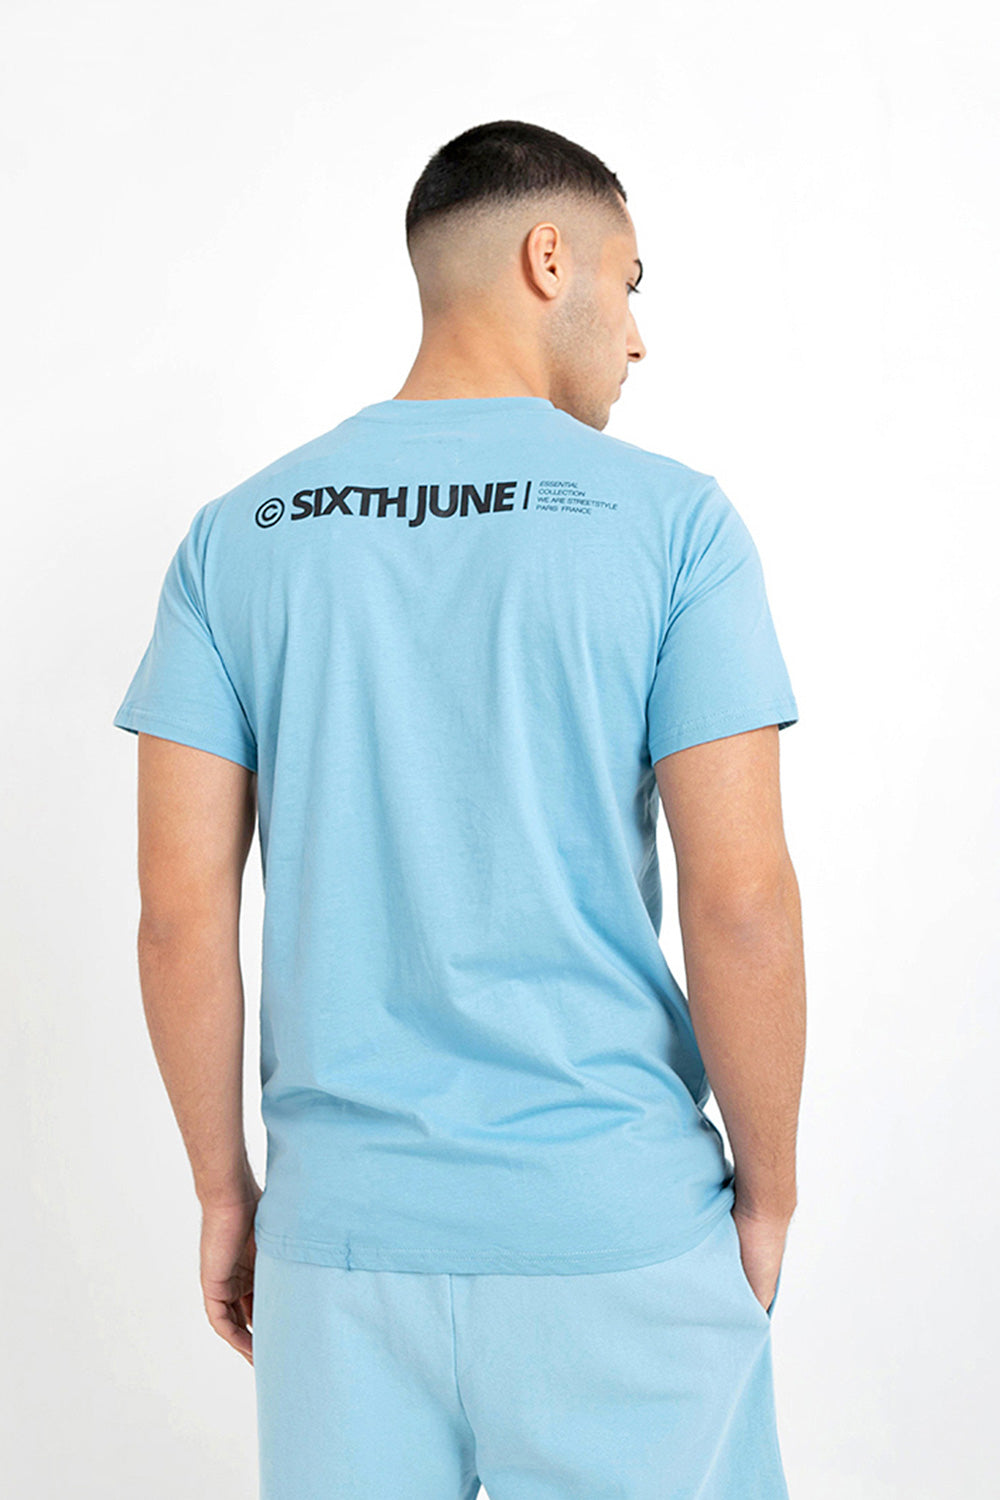 Sixth June - T-shirt essential logo Bleu clair